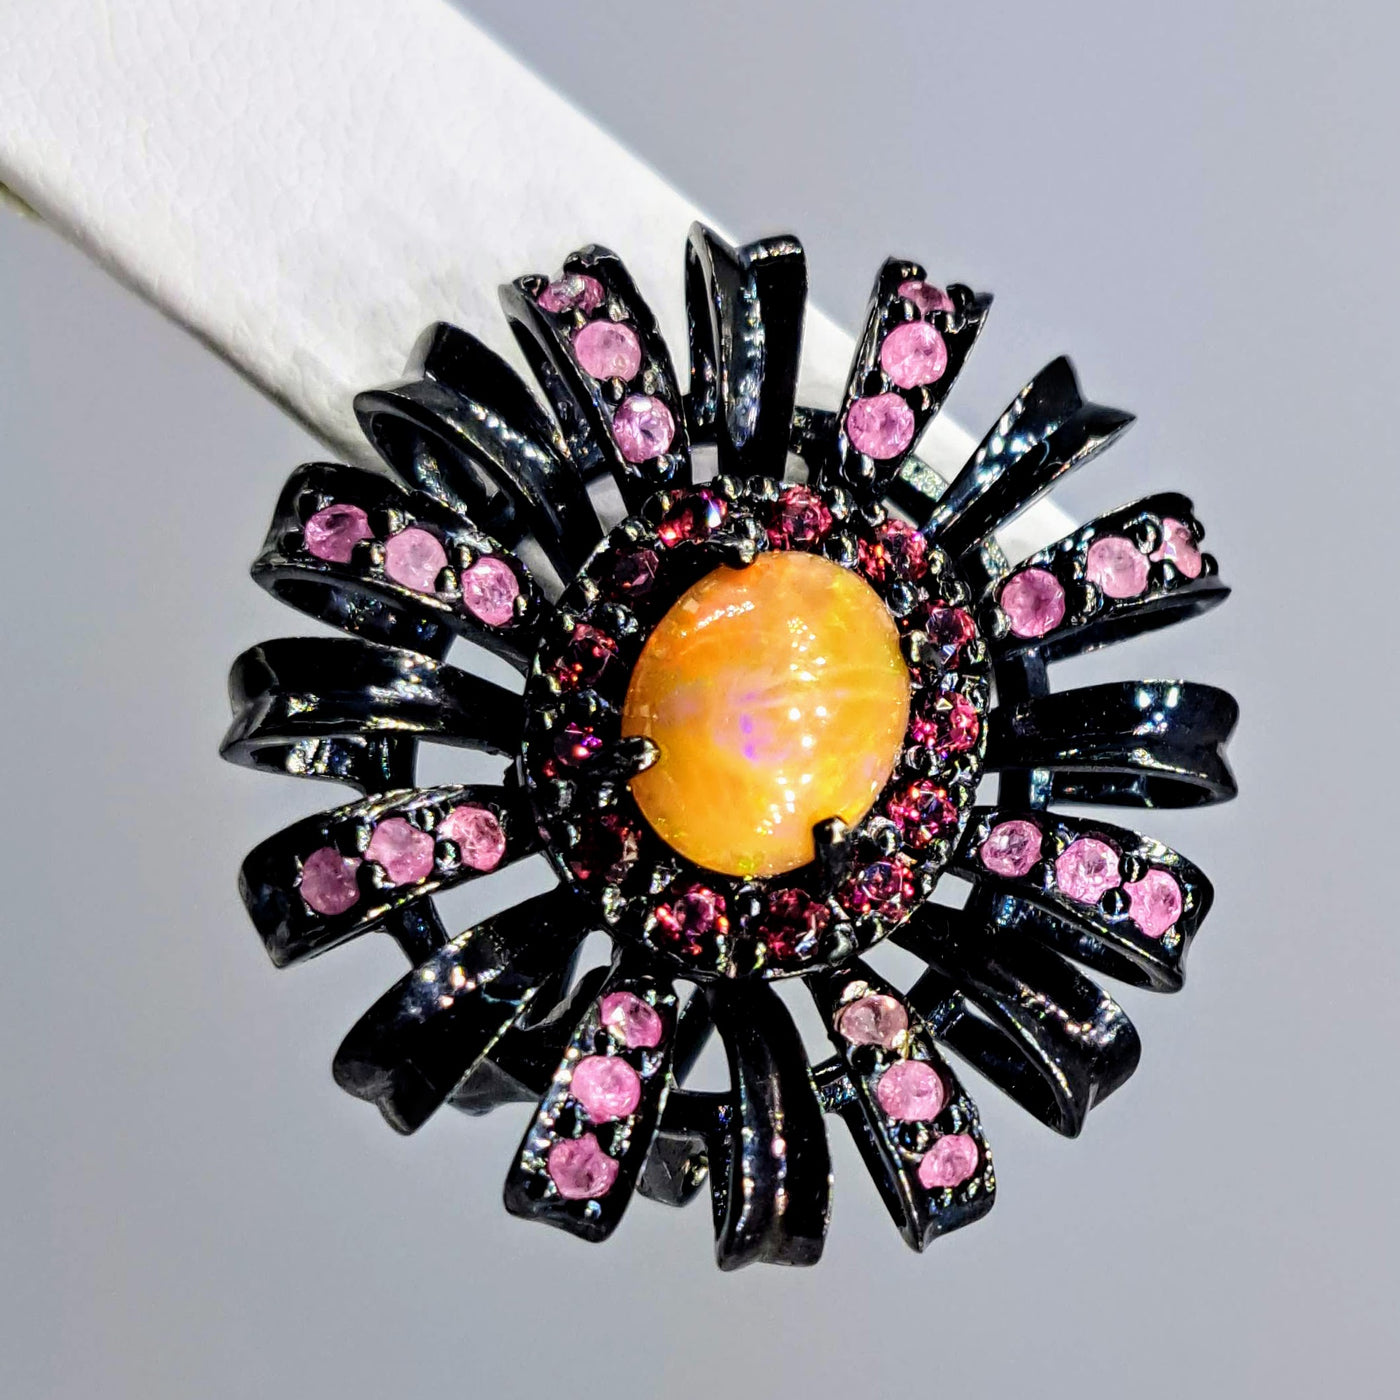 "Black Dahlia" 1.25" Earrings - Opal, Rhodolite Garnet, Ruby, Black Sterling